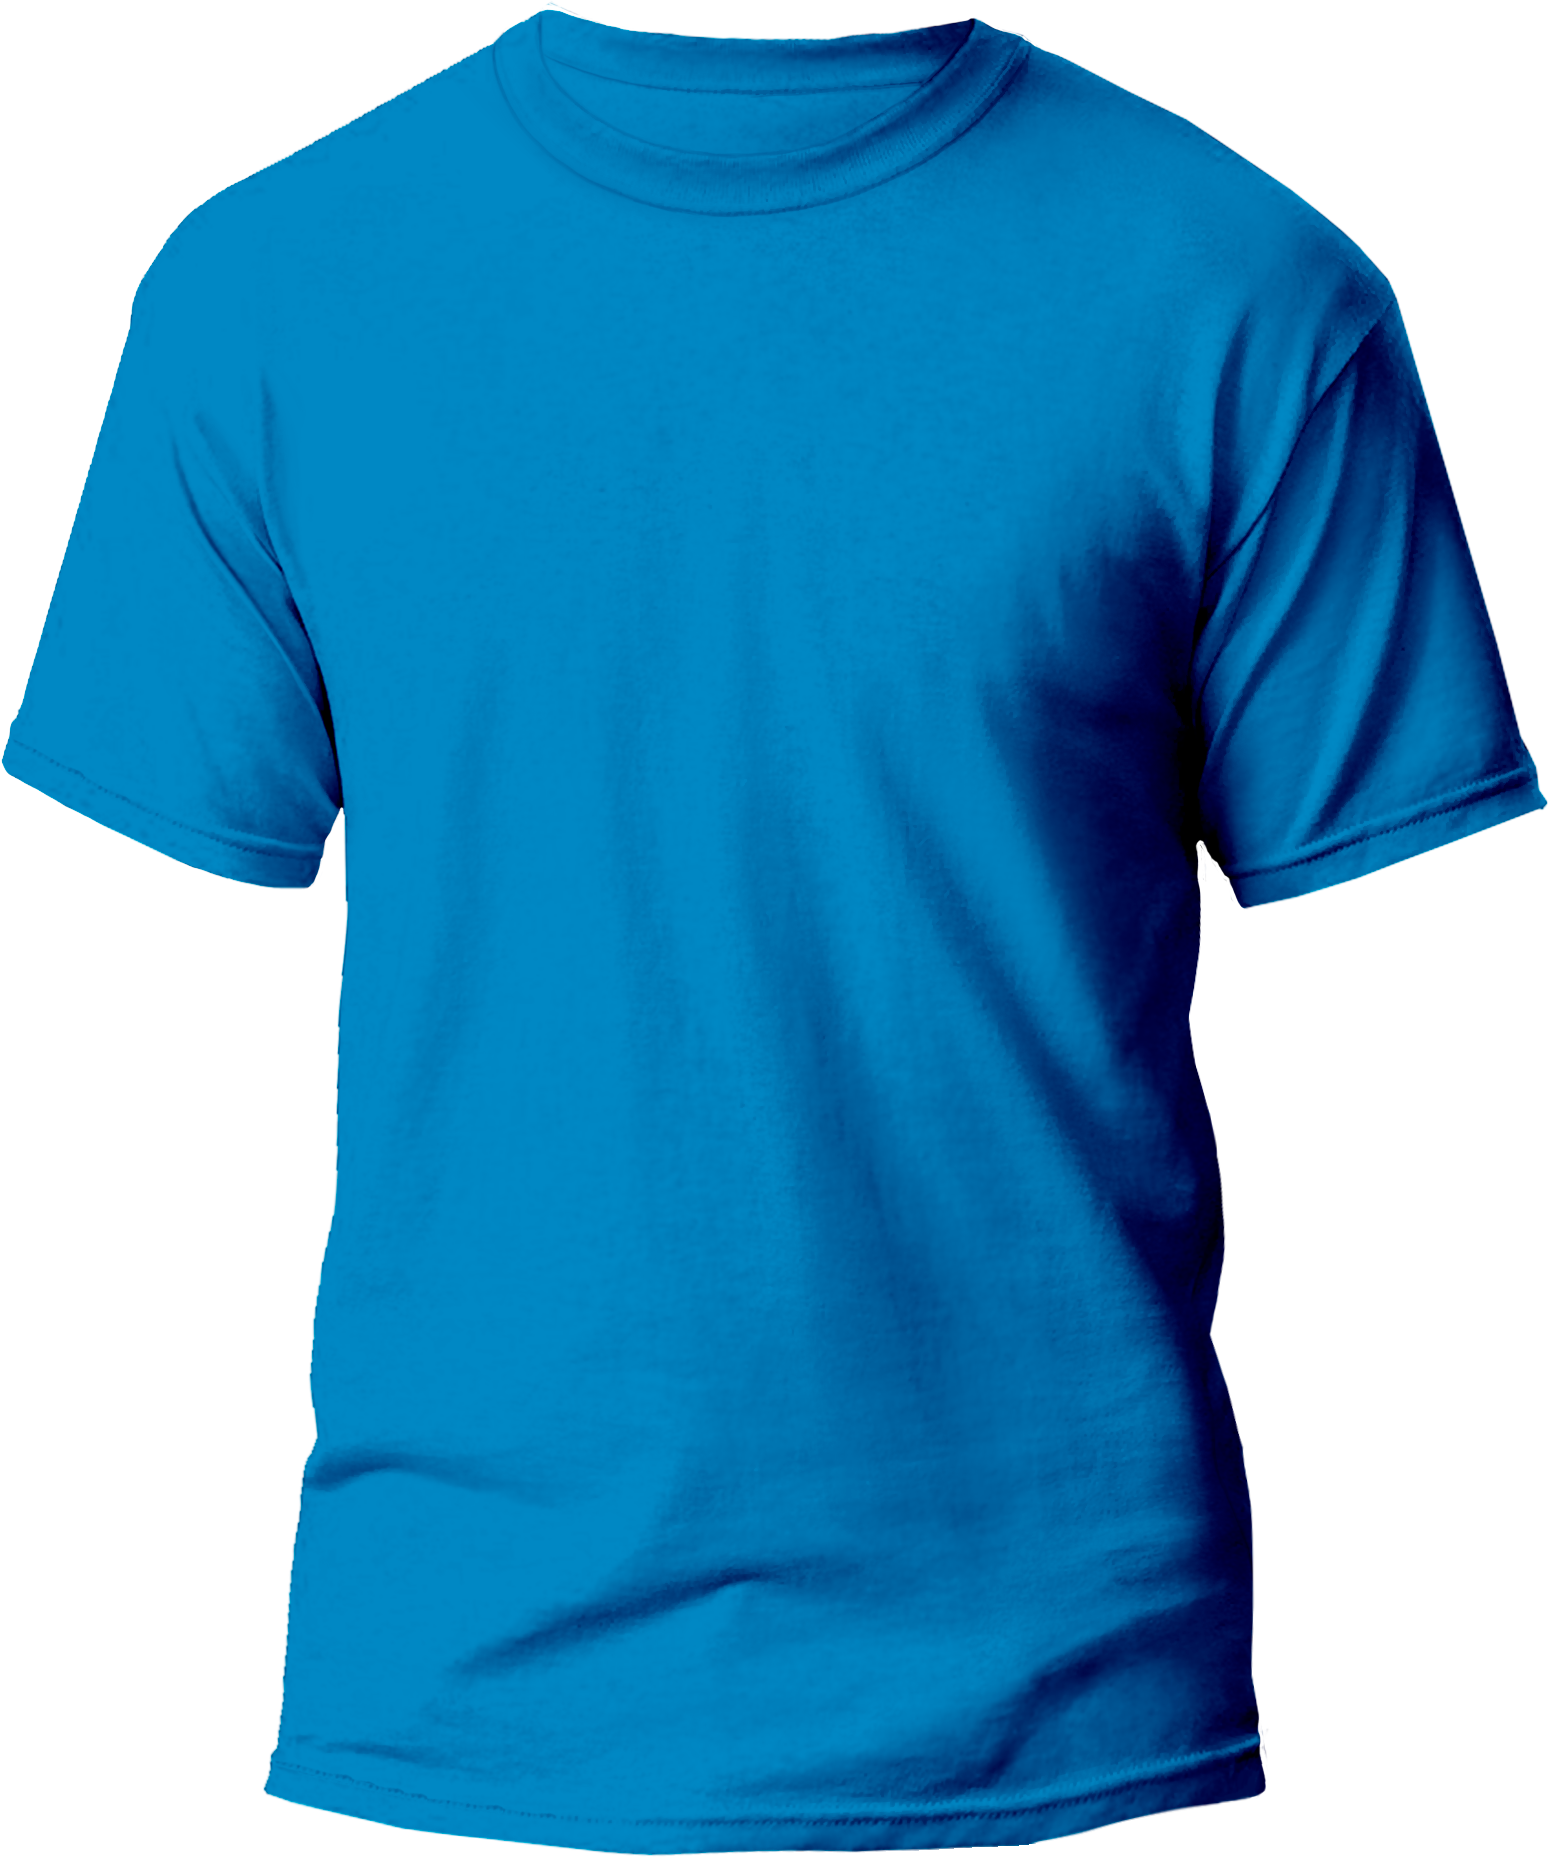 Custom Men's T-Shirts - Design, Buy & Sell (Dropship)